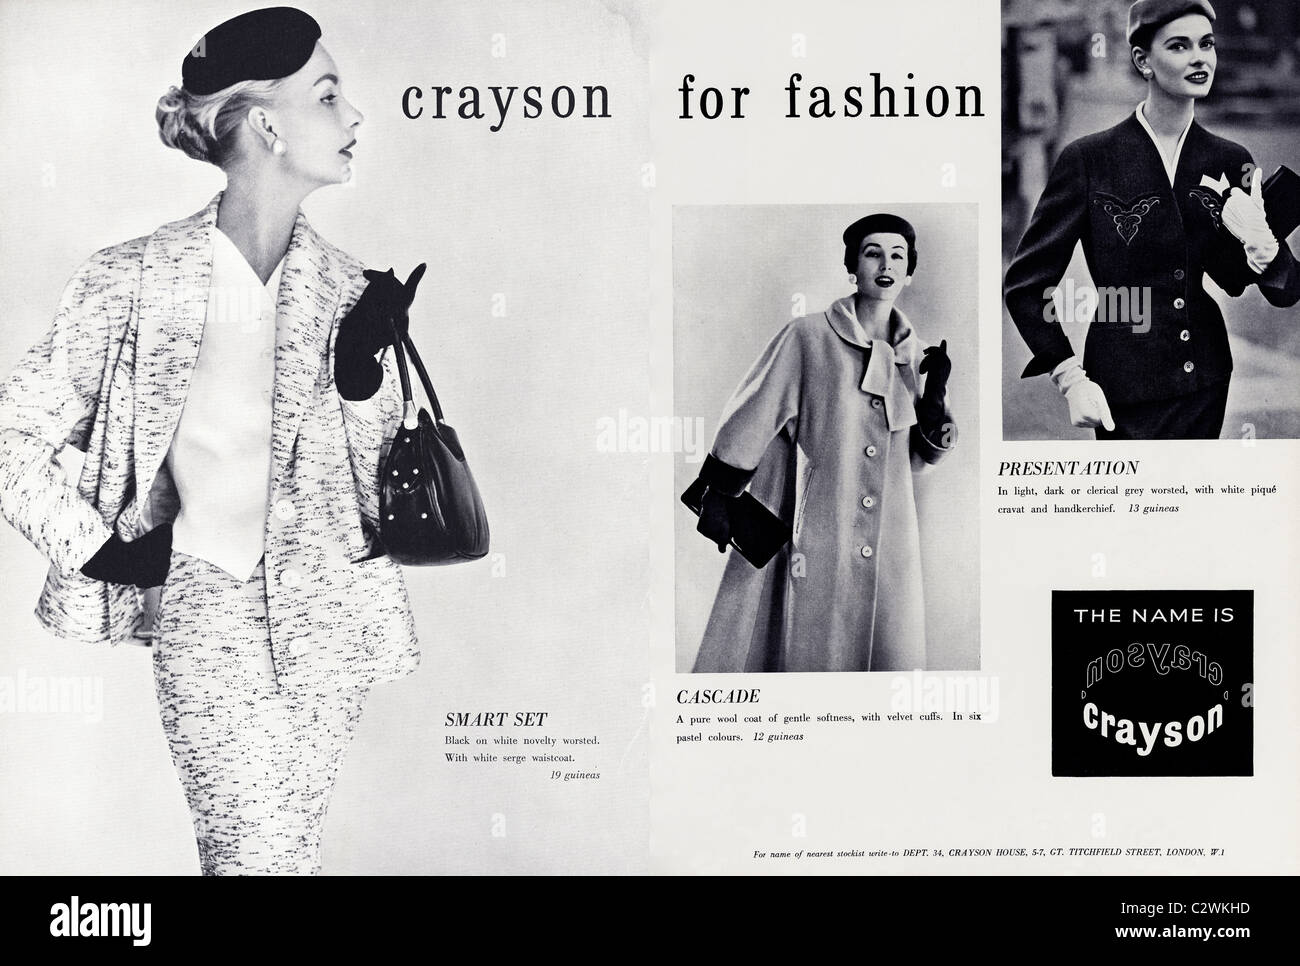 Double page spread colour advertisement for Louis Vuitton travel